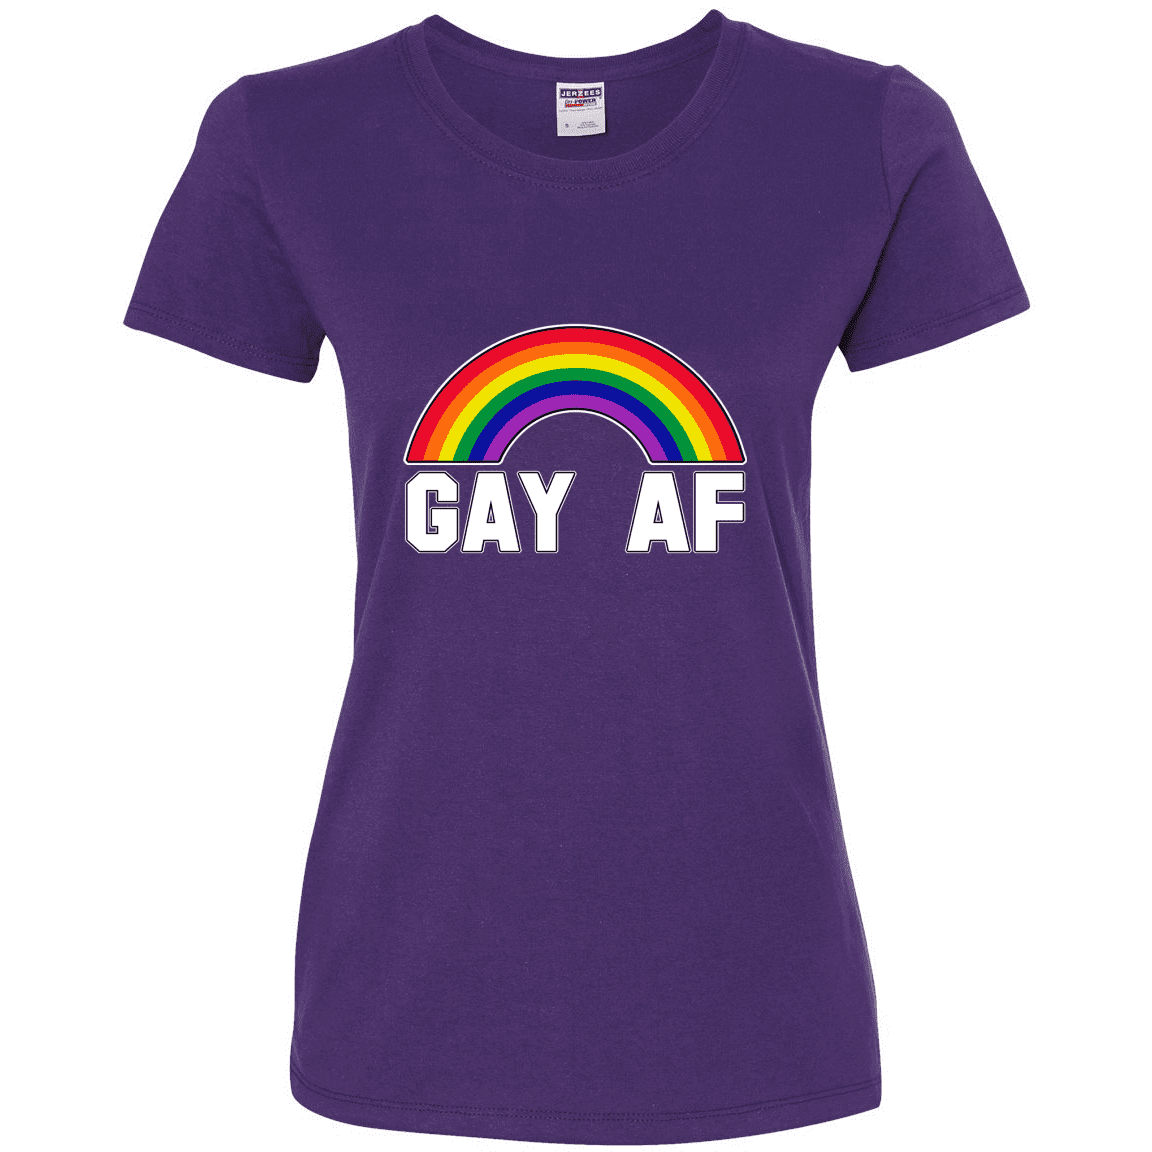 Gay pride dress shirt - idealalapa